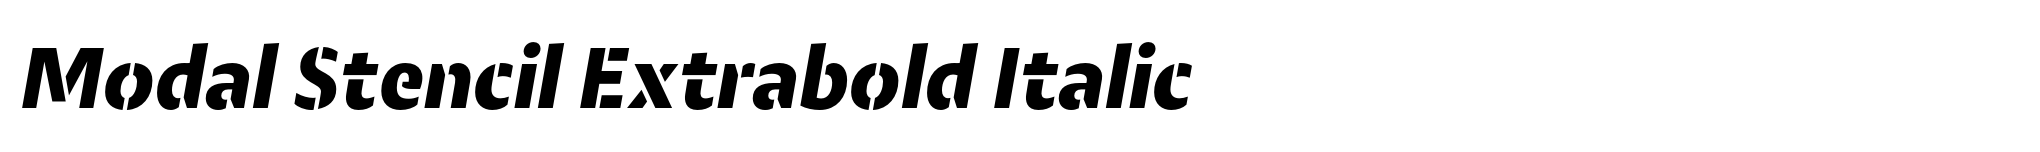 Modal Stencil Extrabold Italic image